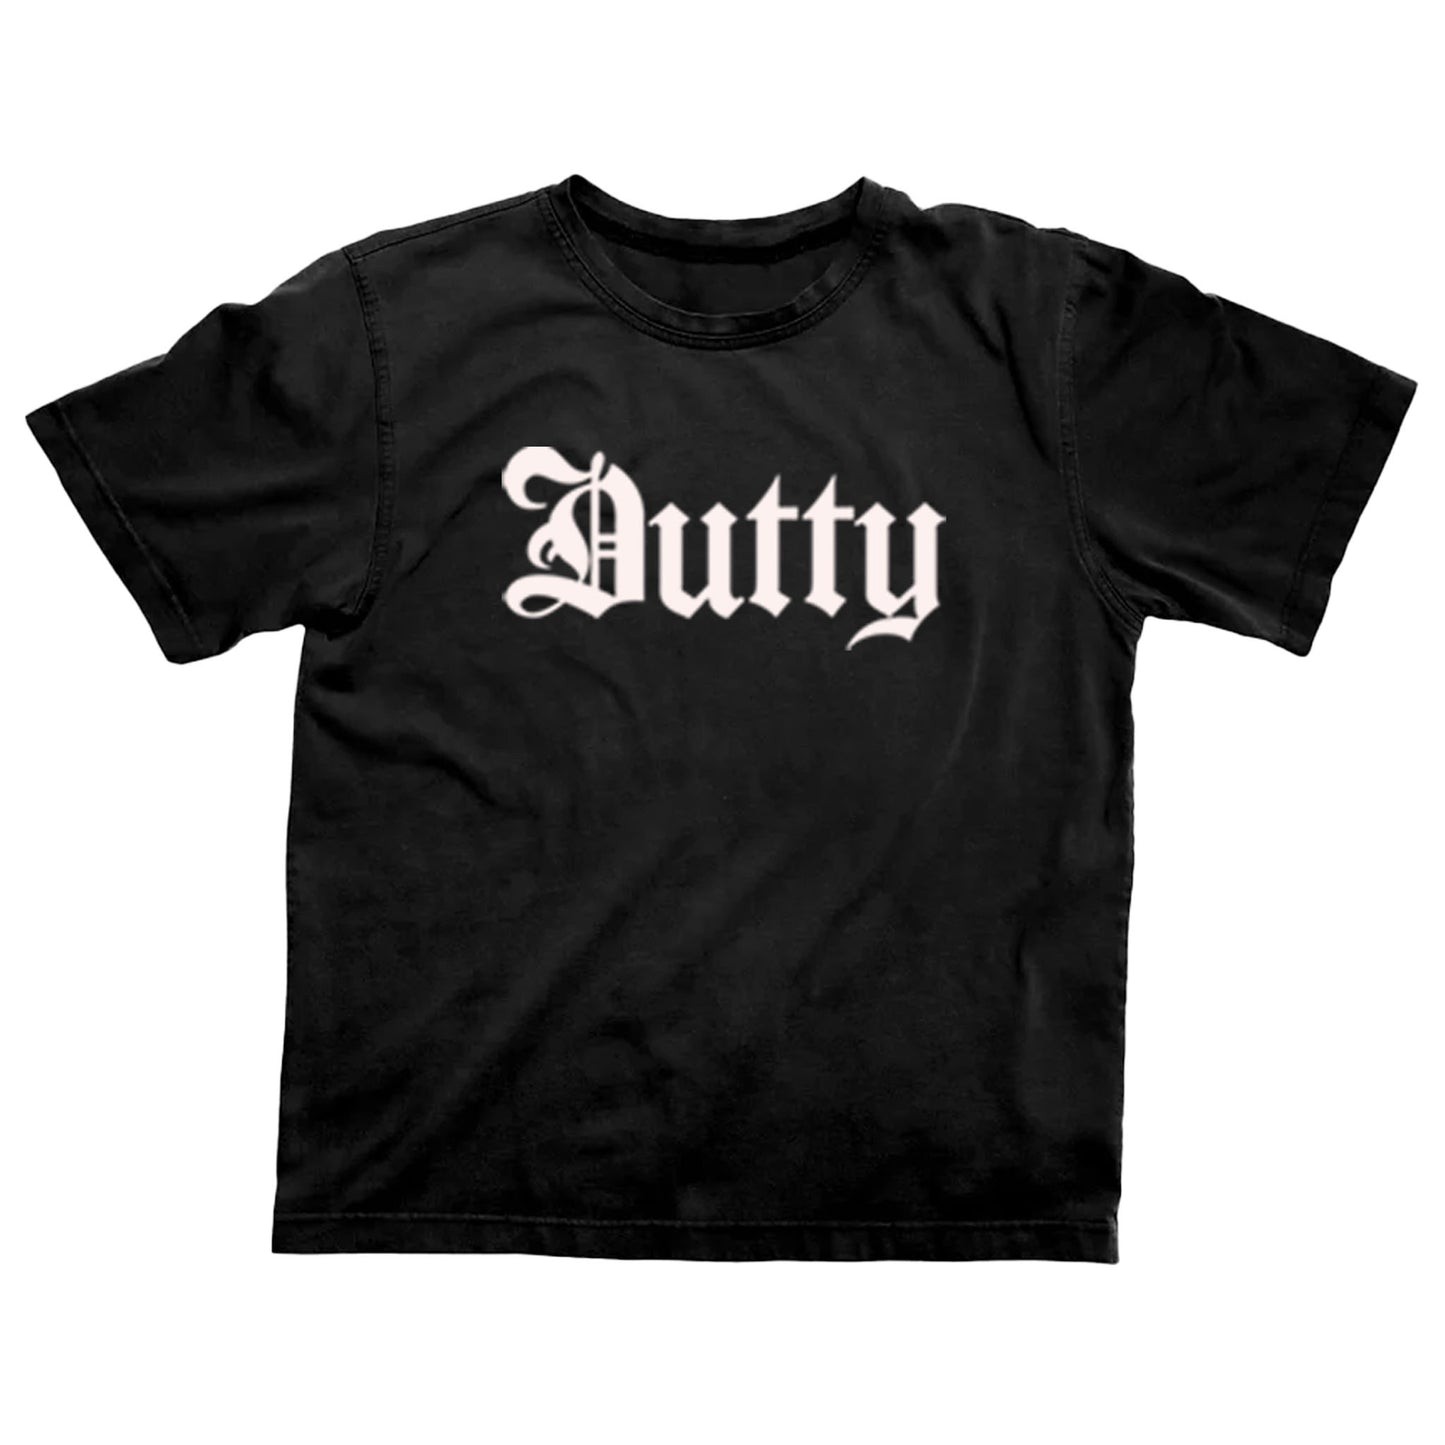 Dutty T-Shirt - White